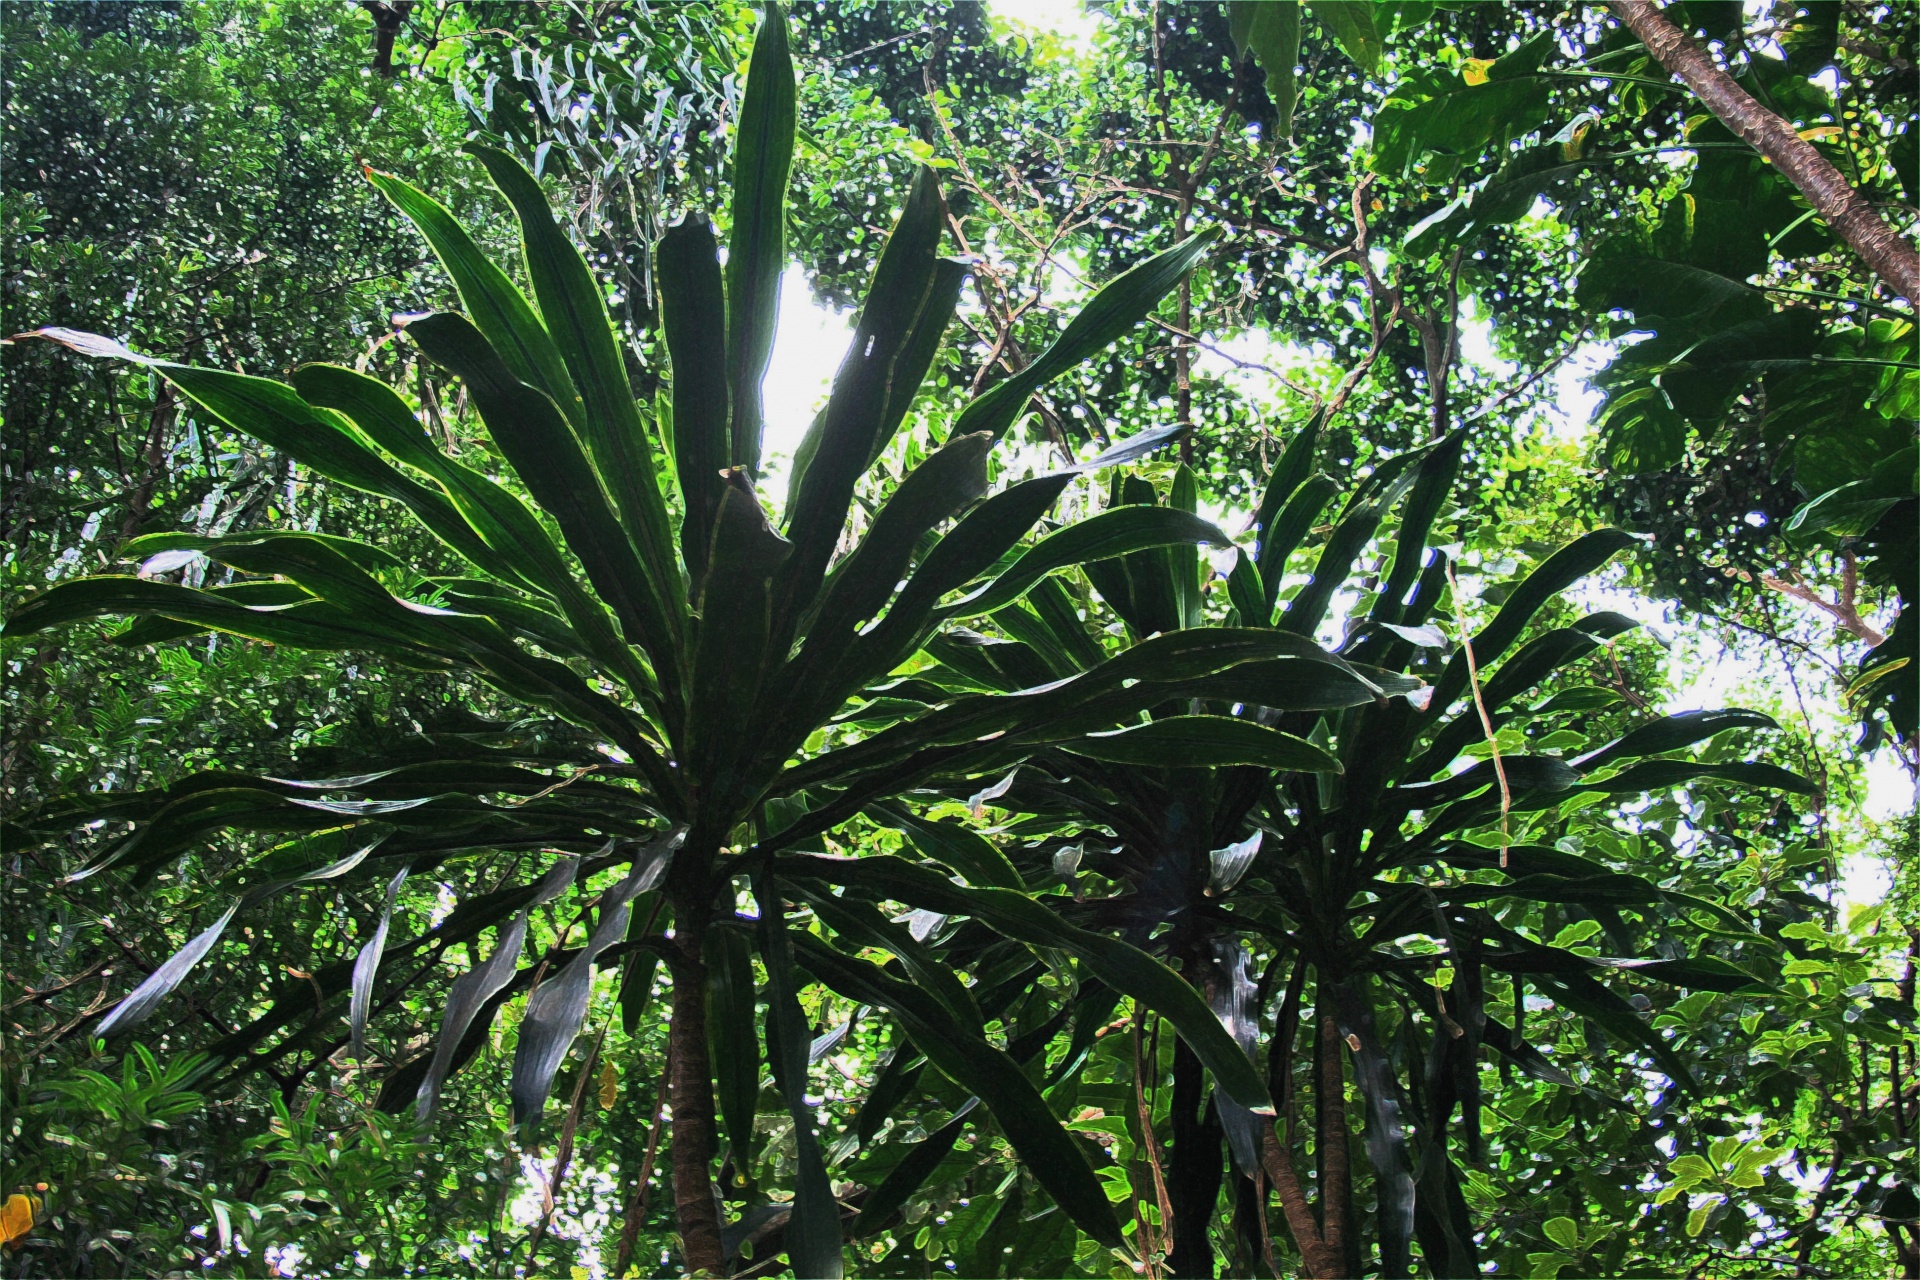 Subtropical Vegetation